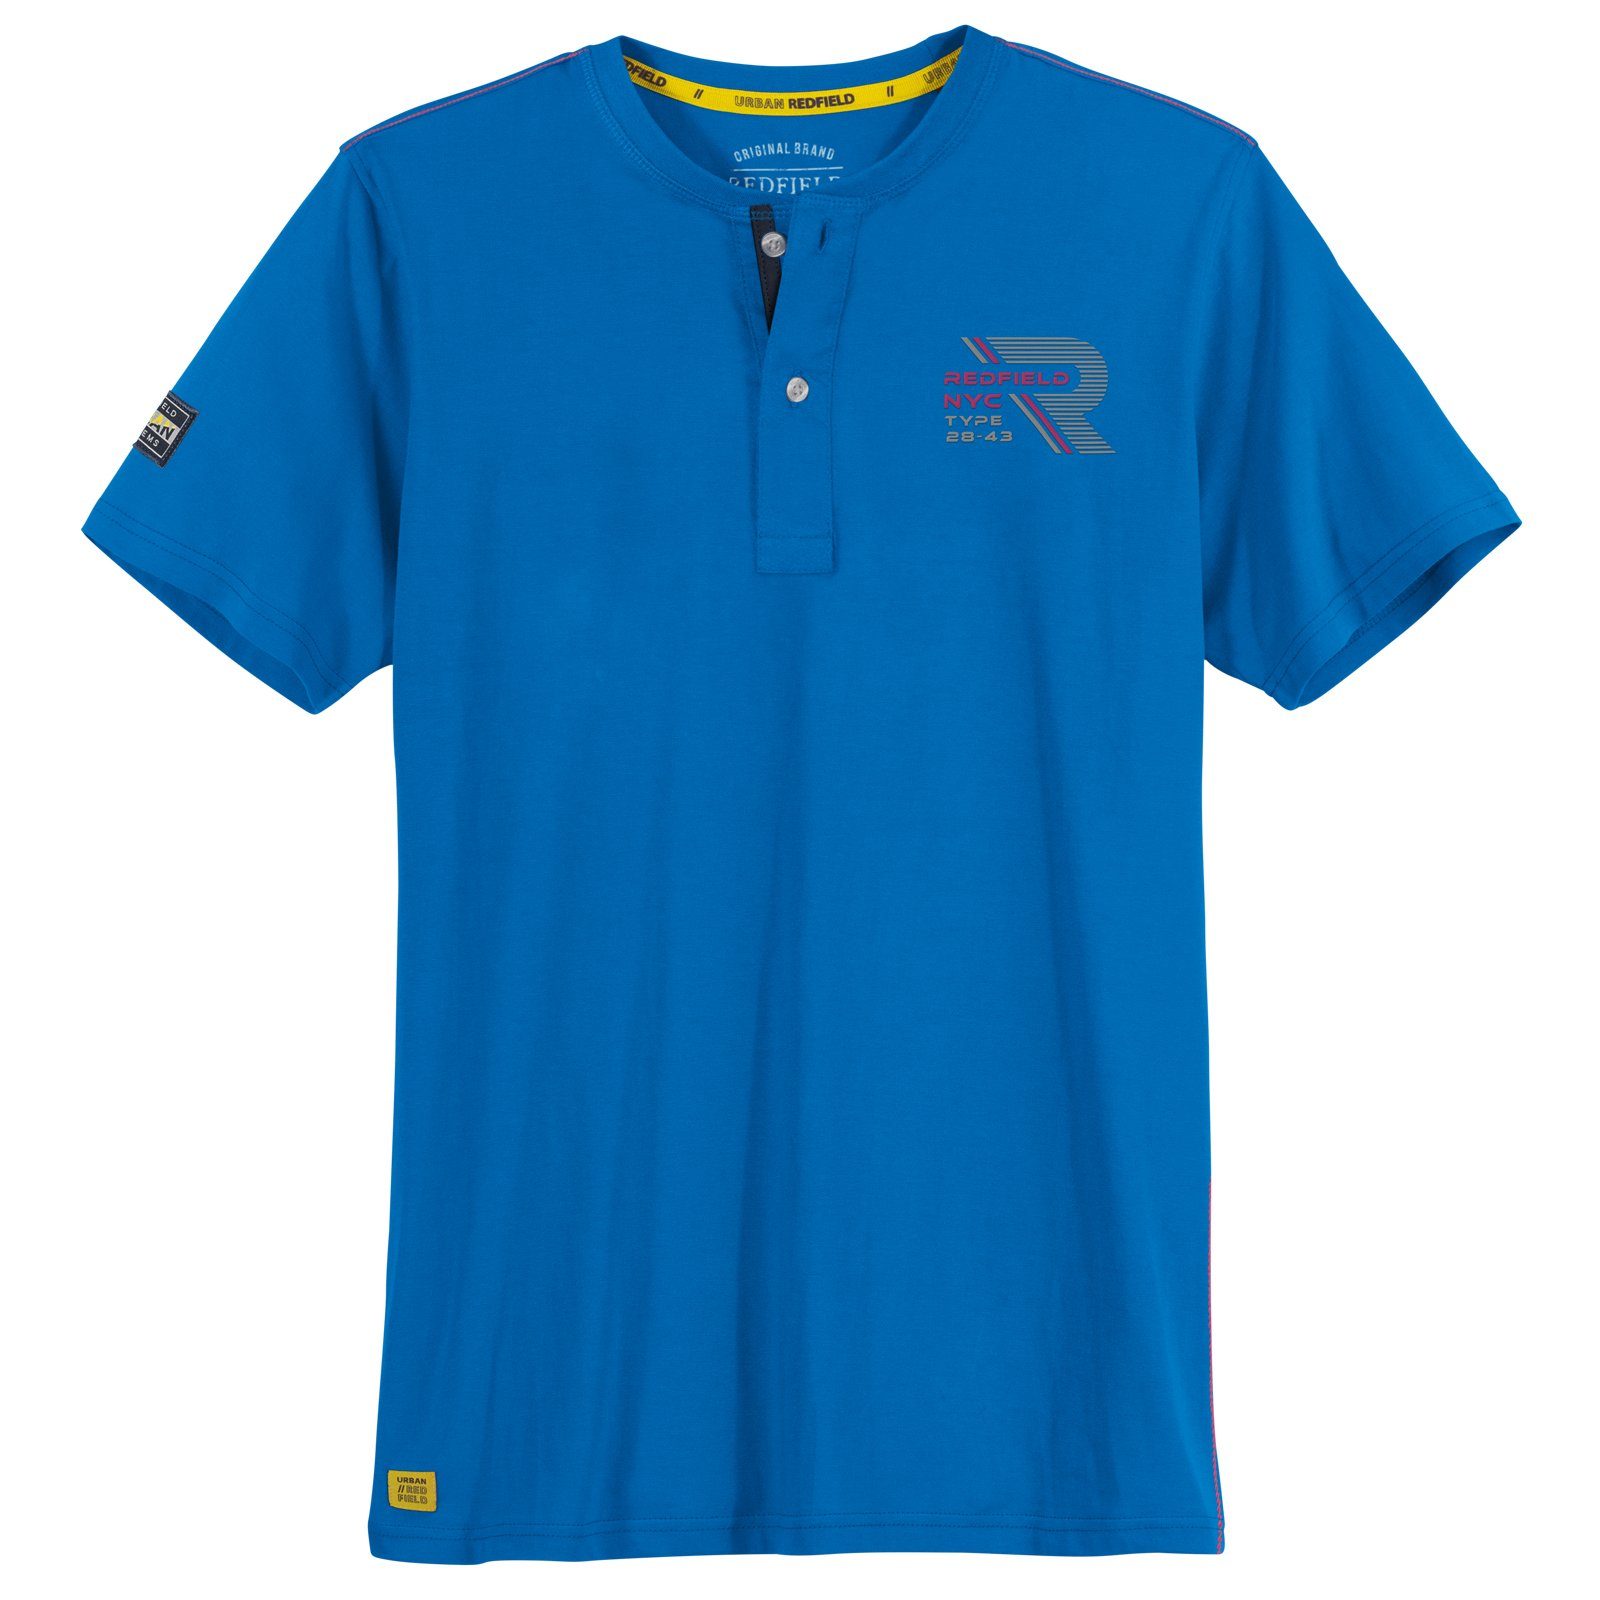 Print-Shirt sportiv Herren royalblau Größen redfield Redfield Große Serafino T-Shirt